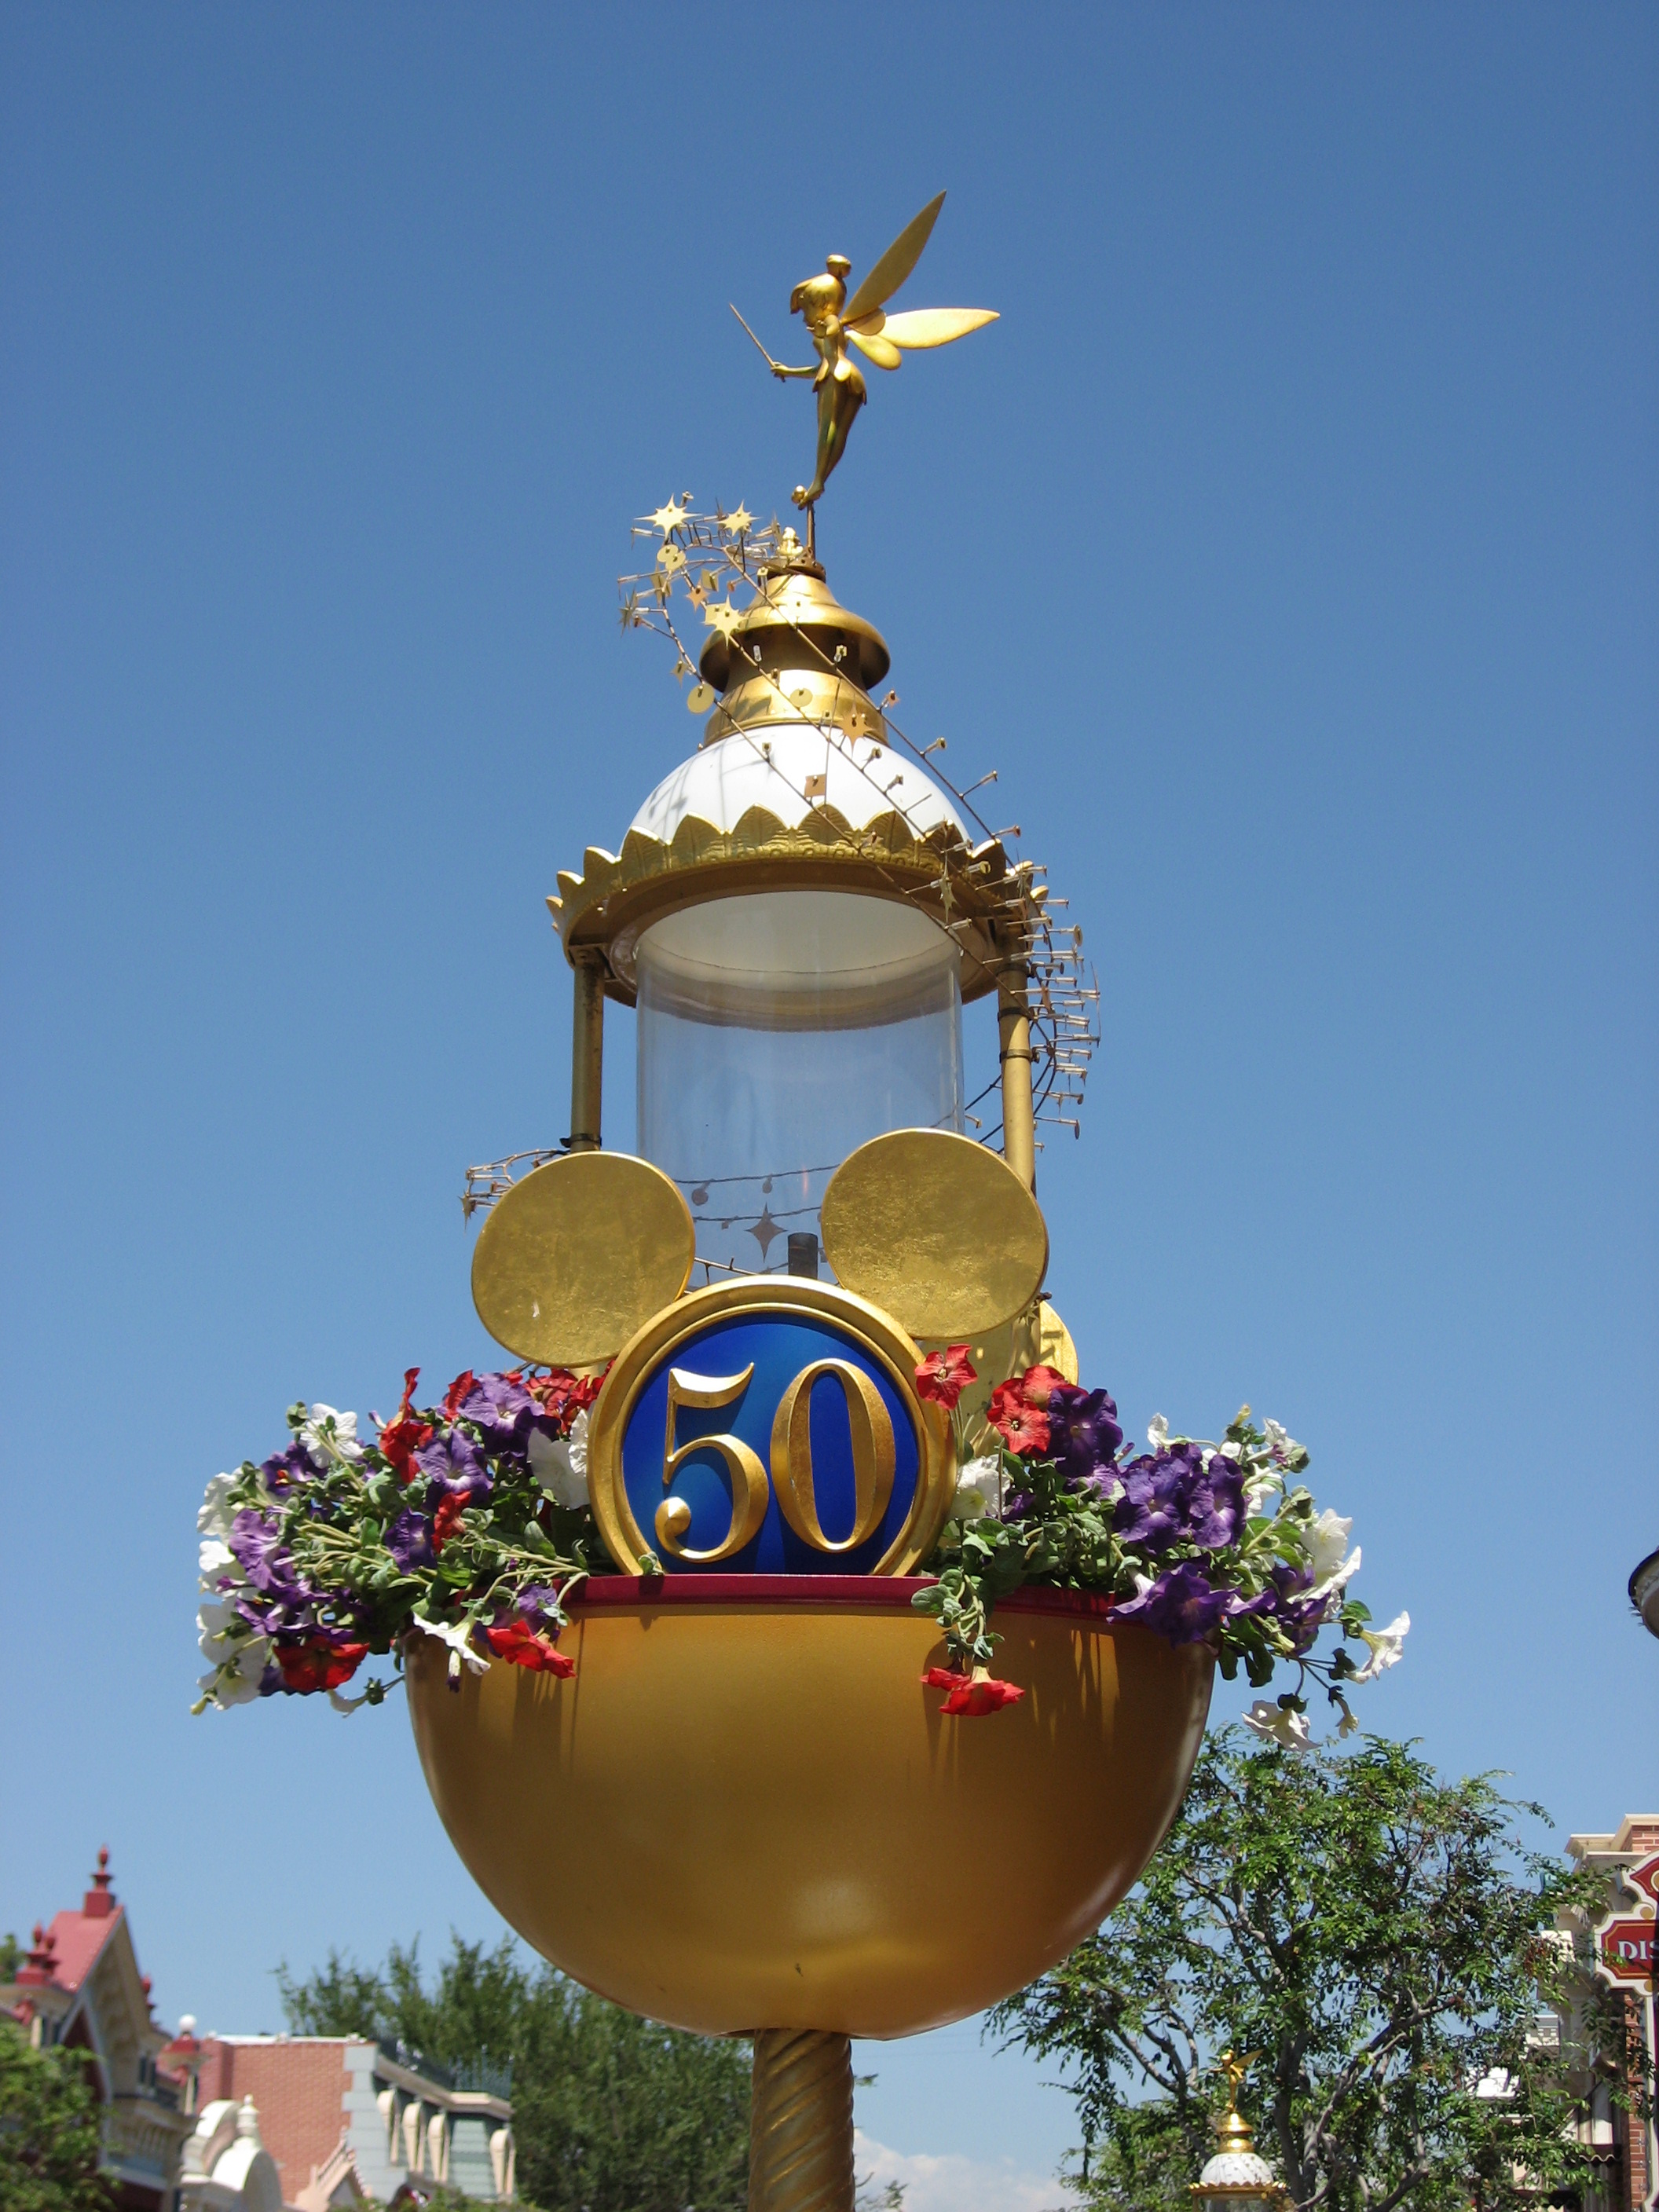 File:Disneyland-50th lamppost.jpg - Wikimedia Commons